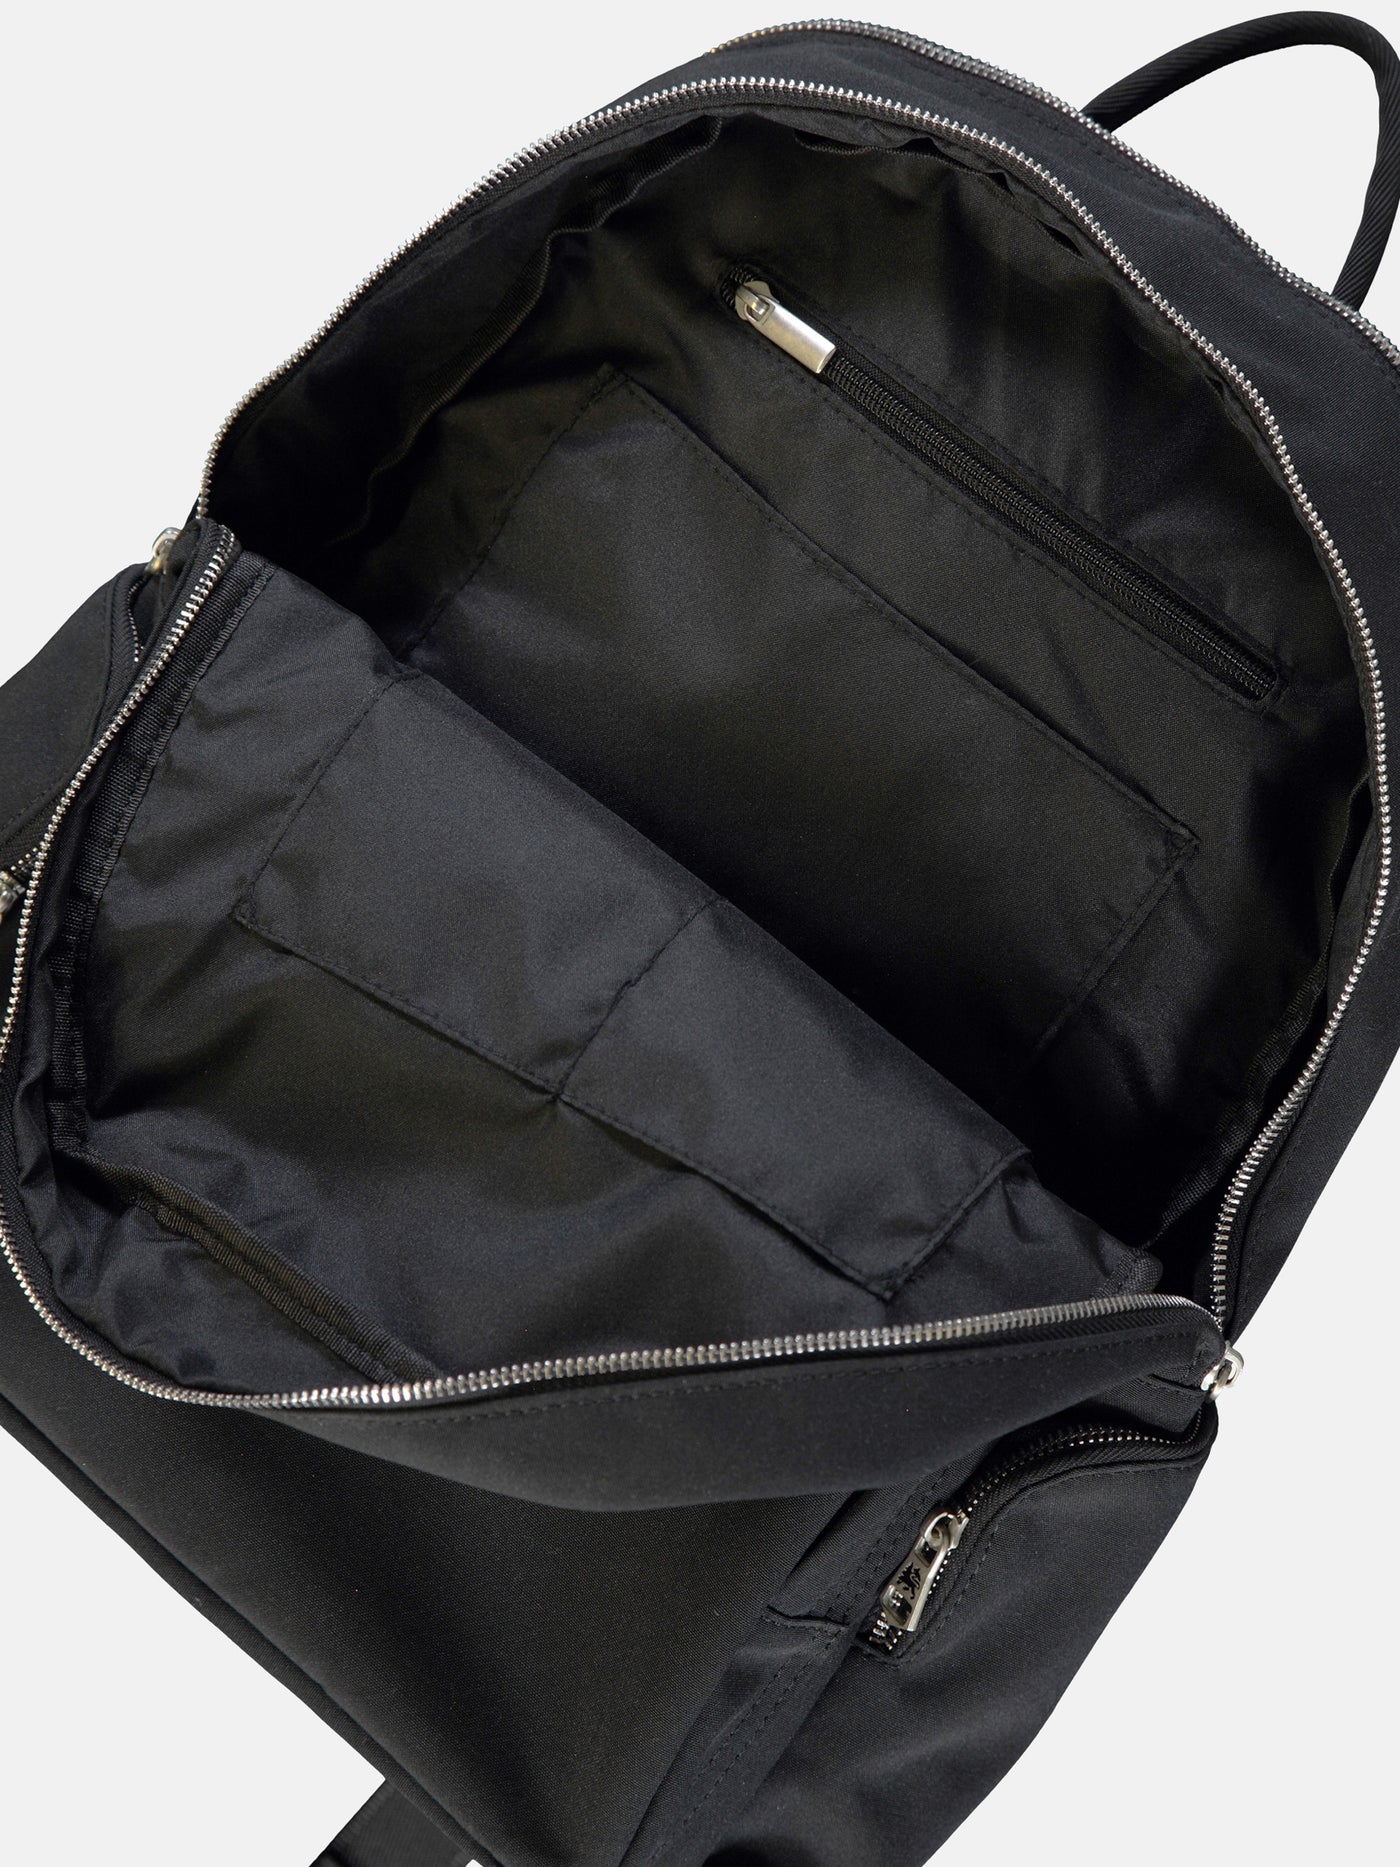 Basic backpack with many outside pockets